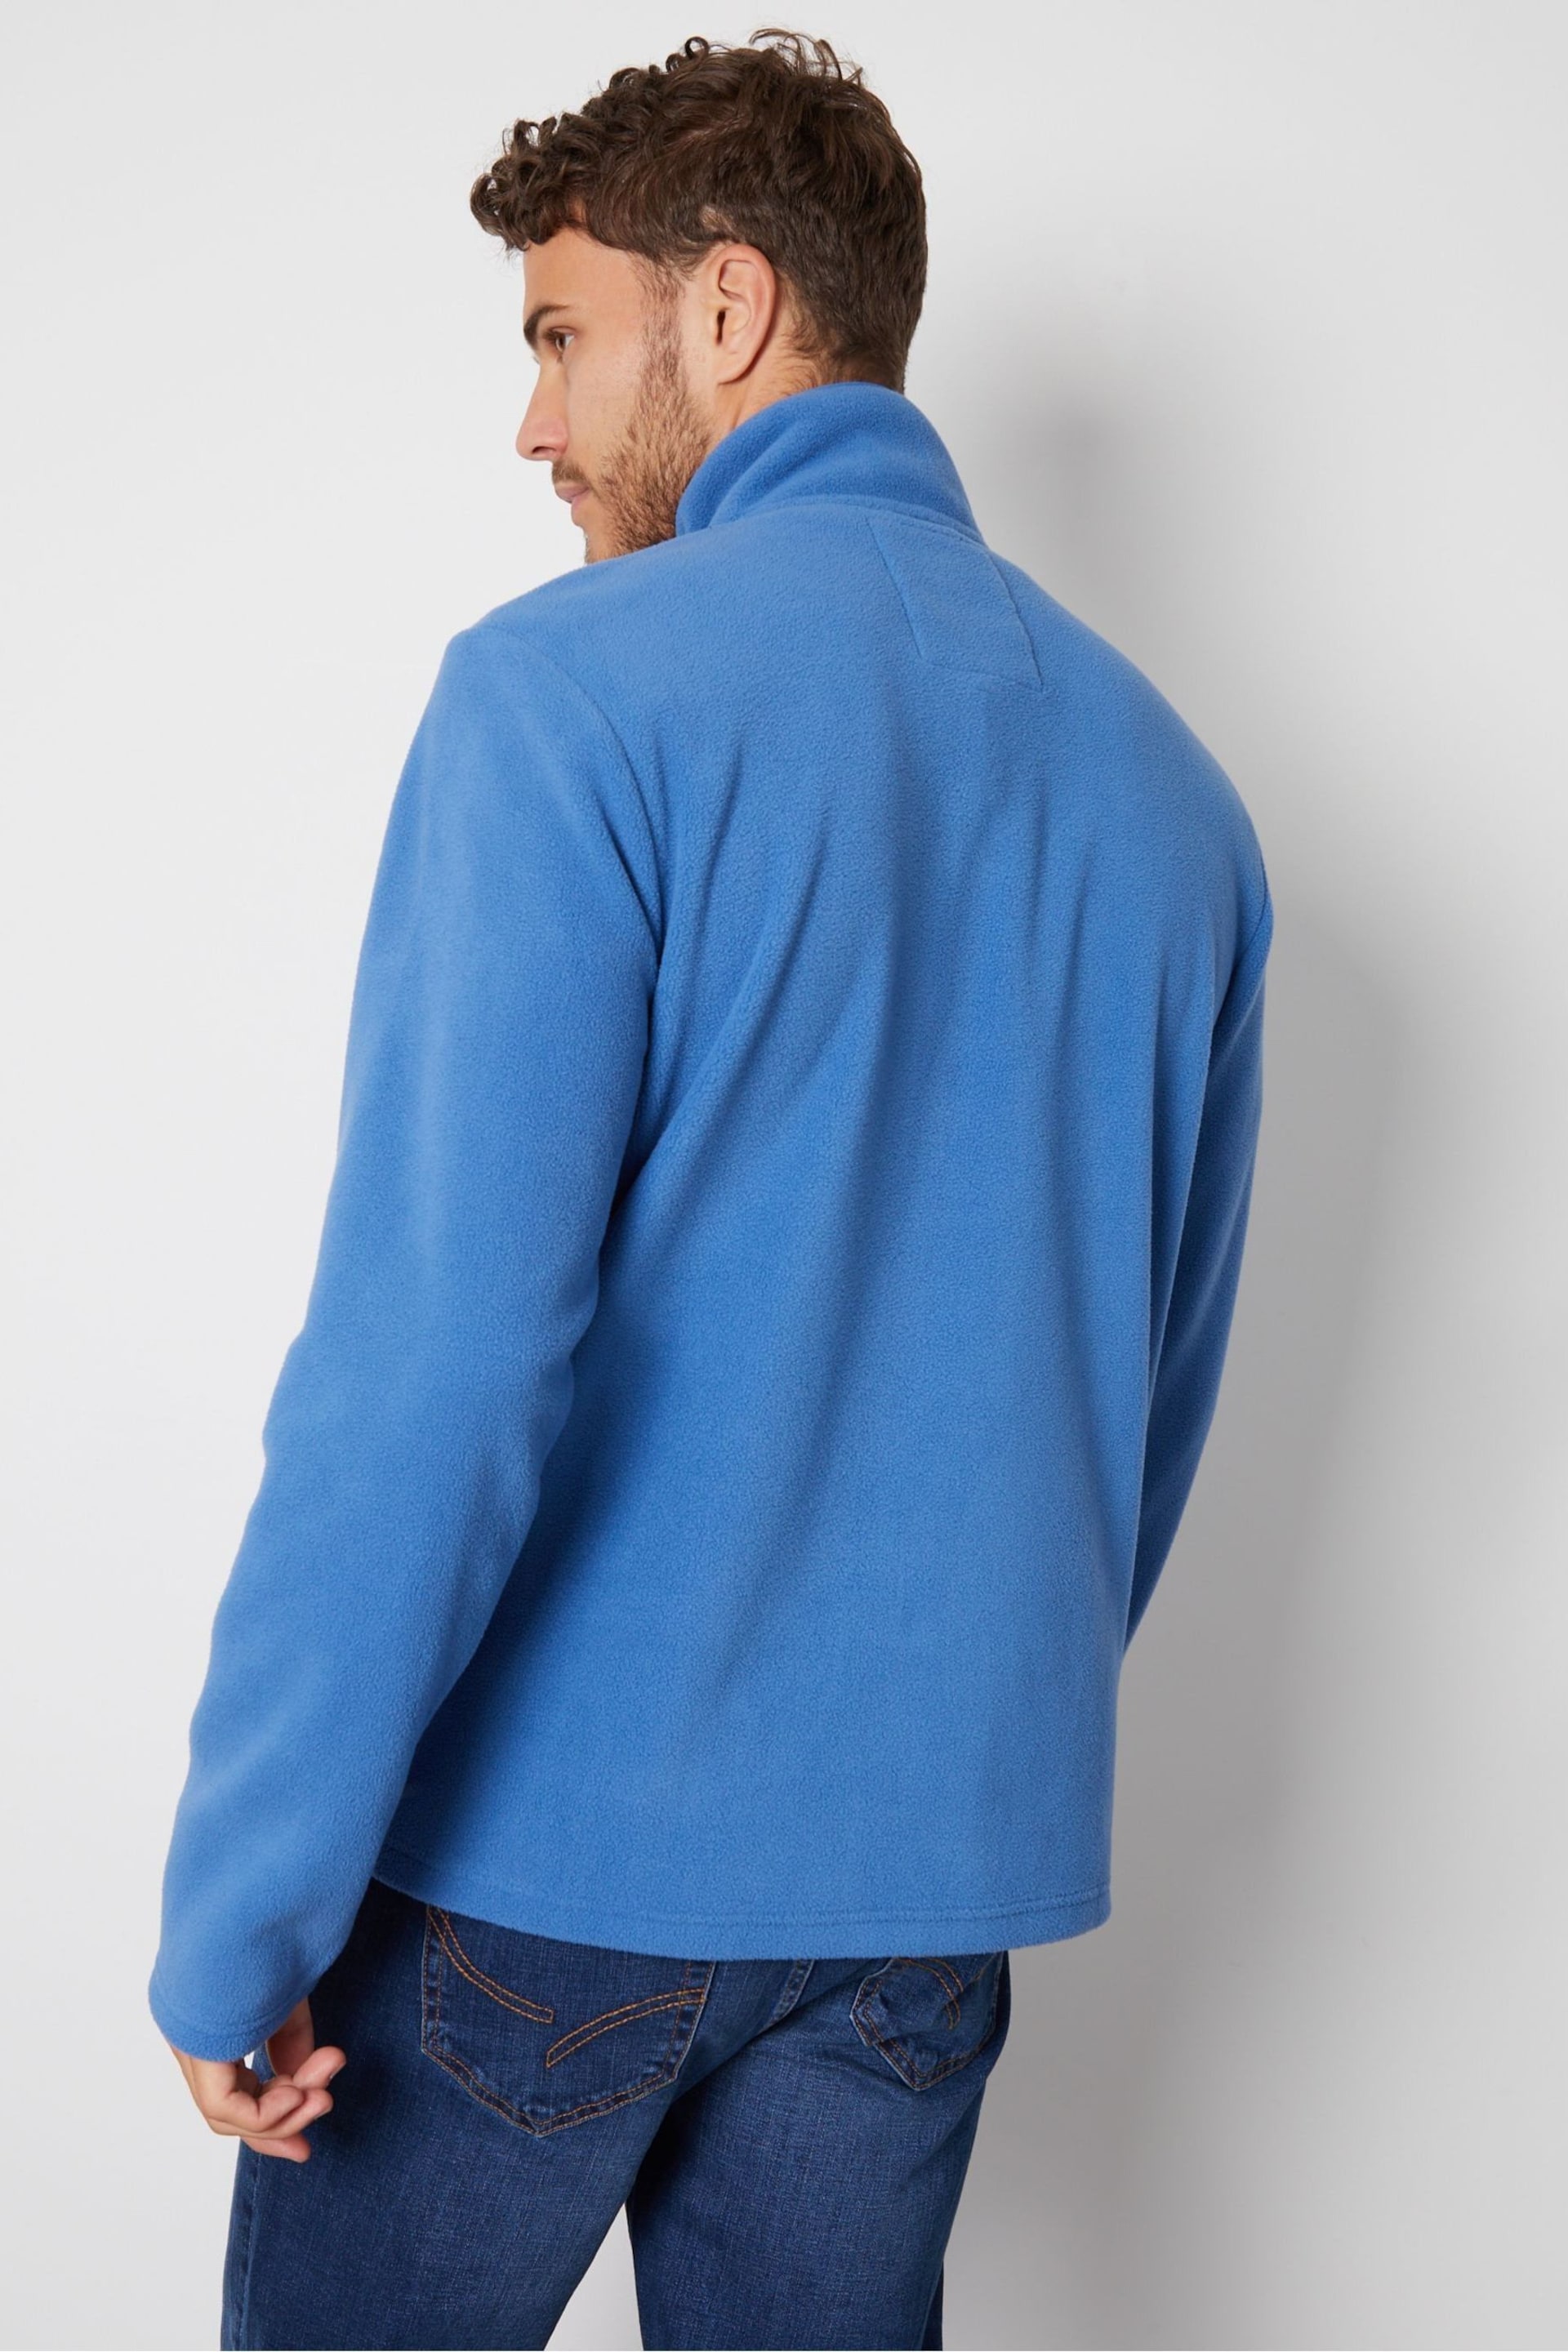 Threadbare Light Blue 1/4 Zip Fleece Sweatshirt - Image 3 of 4